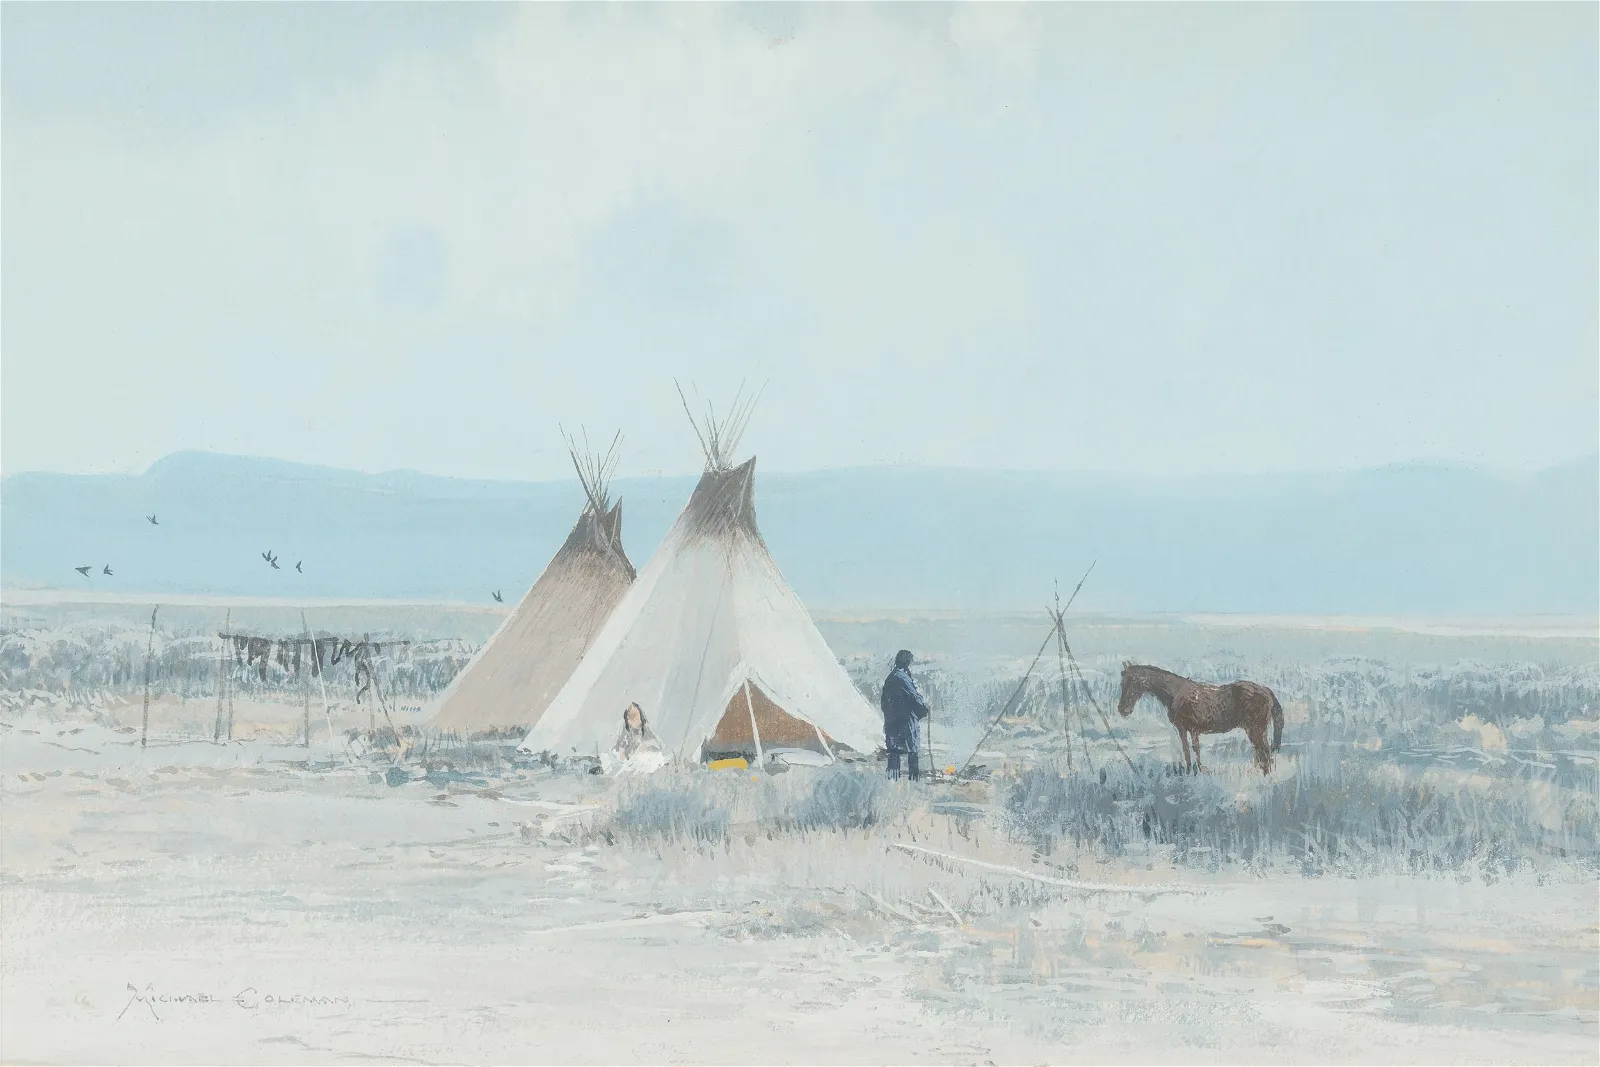 Michael	Coleman – Cheyenne Camp